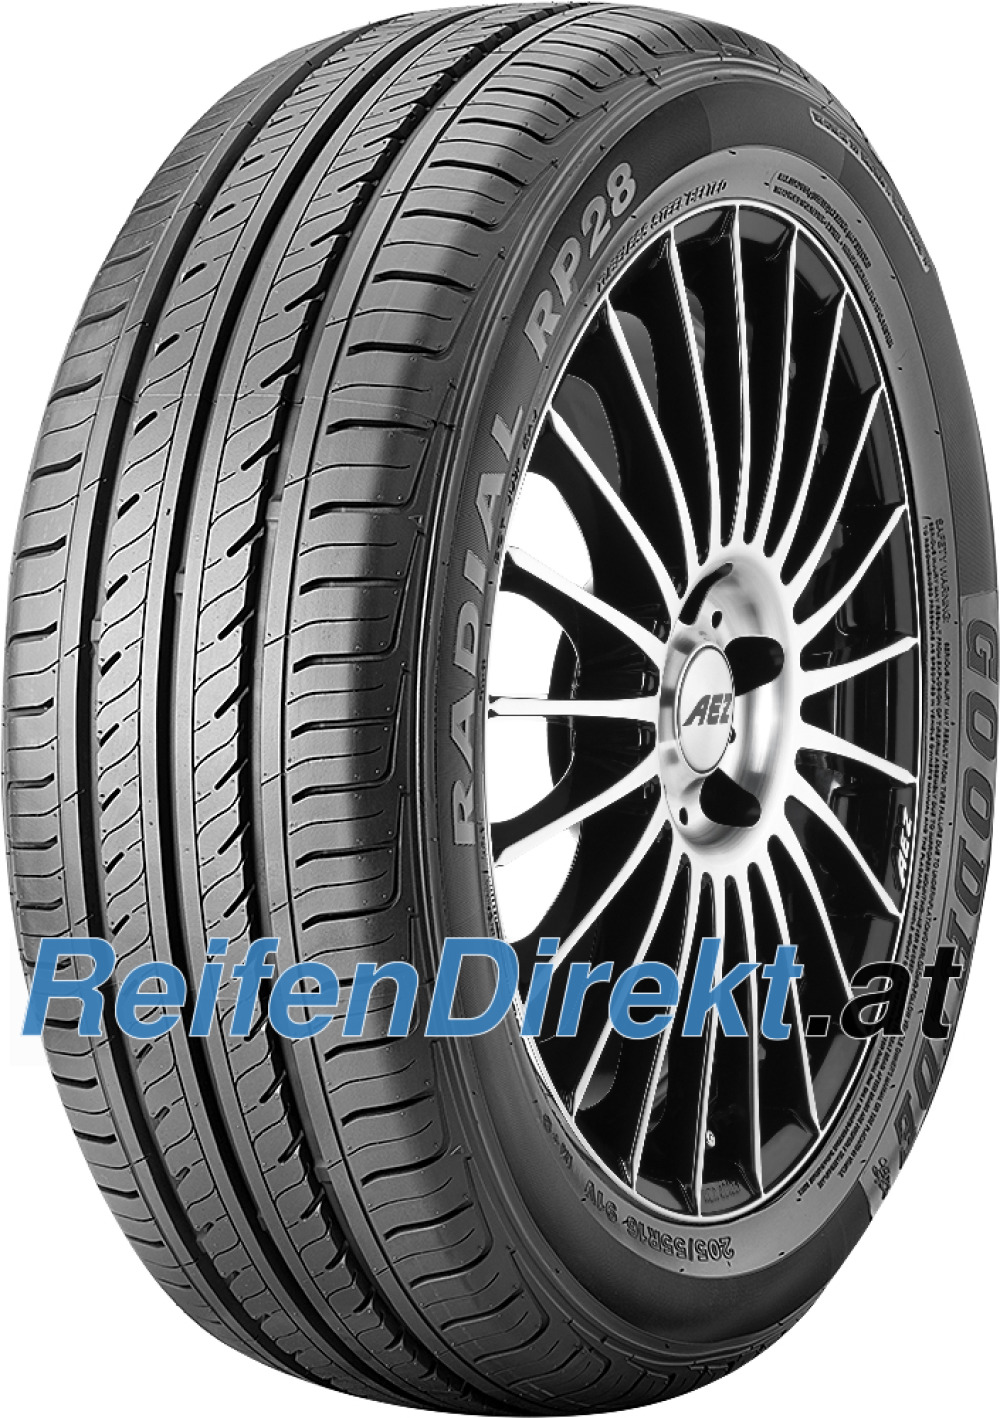 2x Goodride SA57 205 55 R16 94W XL Auto Reifen Sommer 